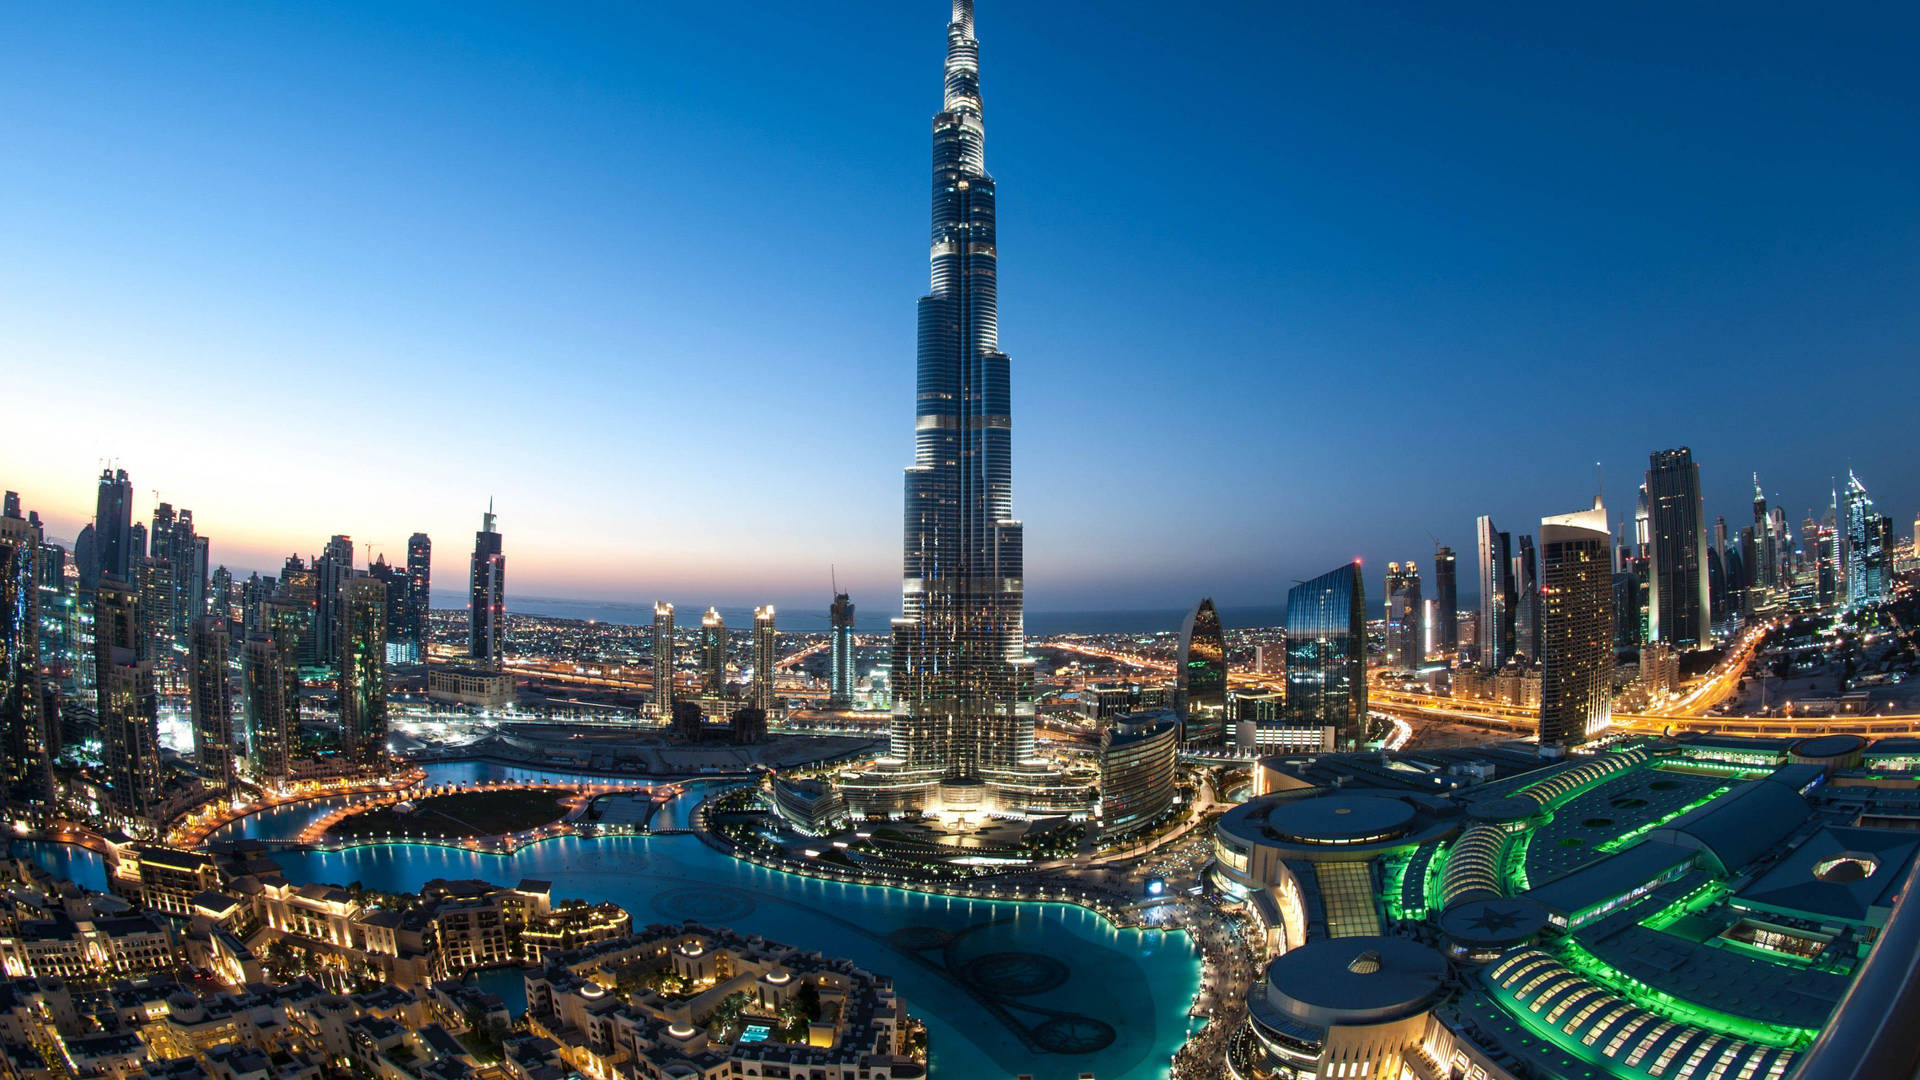 100 Burj Khalifa Pictures  Download Free Images on Unsplash